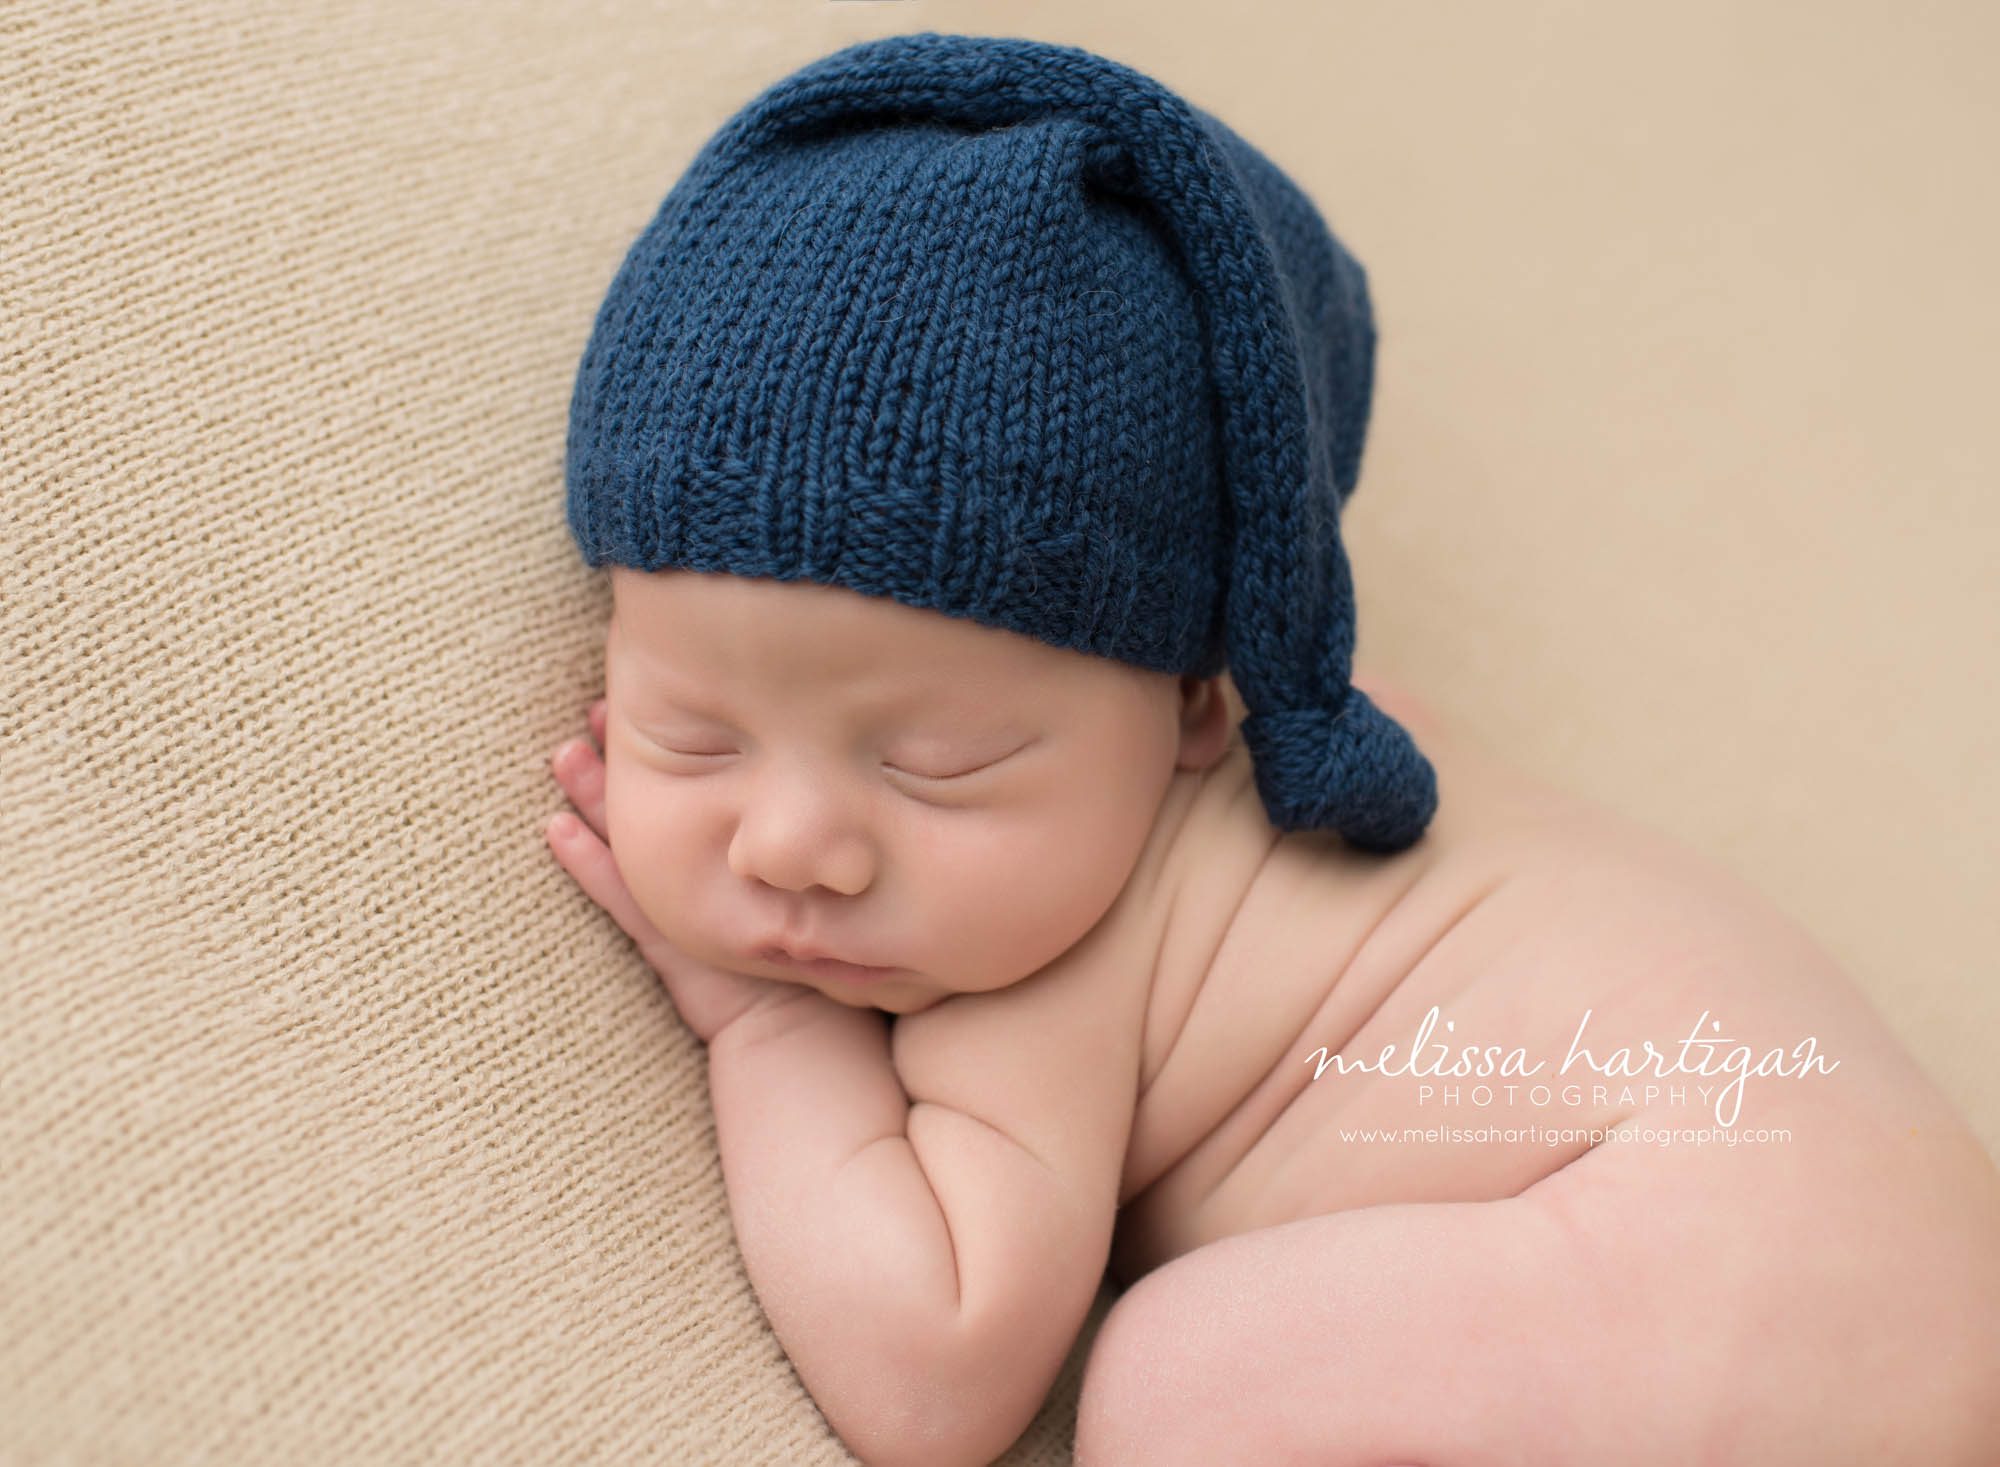 Melissa Hartigan Photography CT Newborn Photographer Taave CT Newborn Session baby boy sleeping on tan blanket with blue knit hat